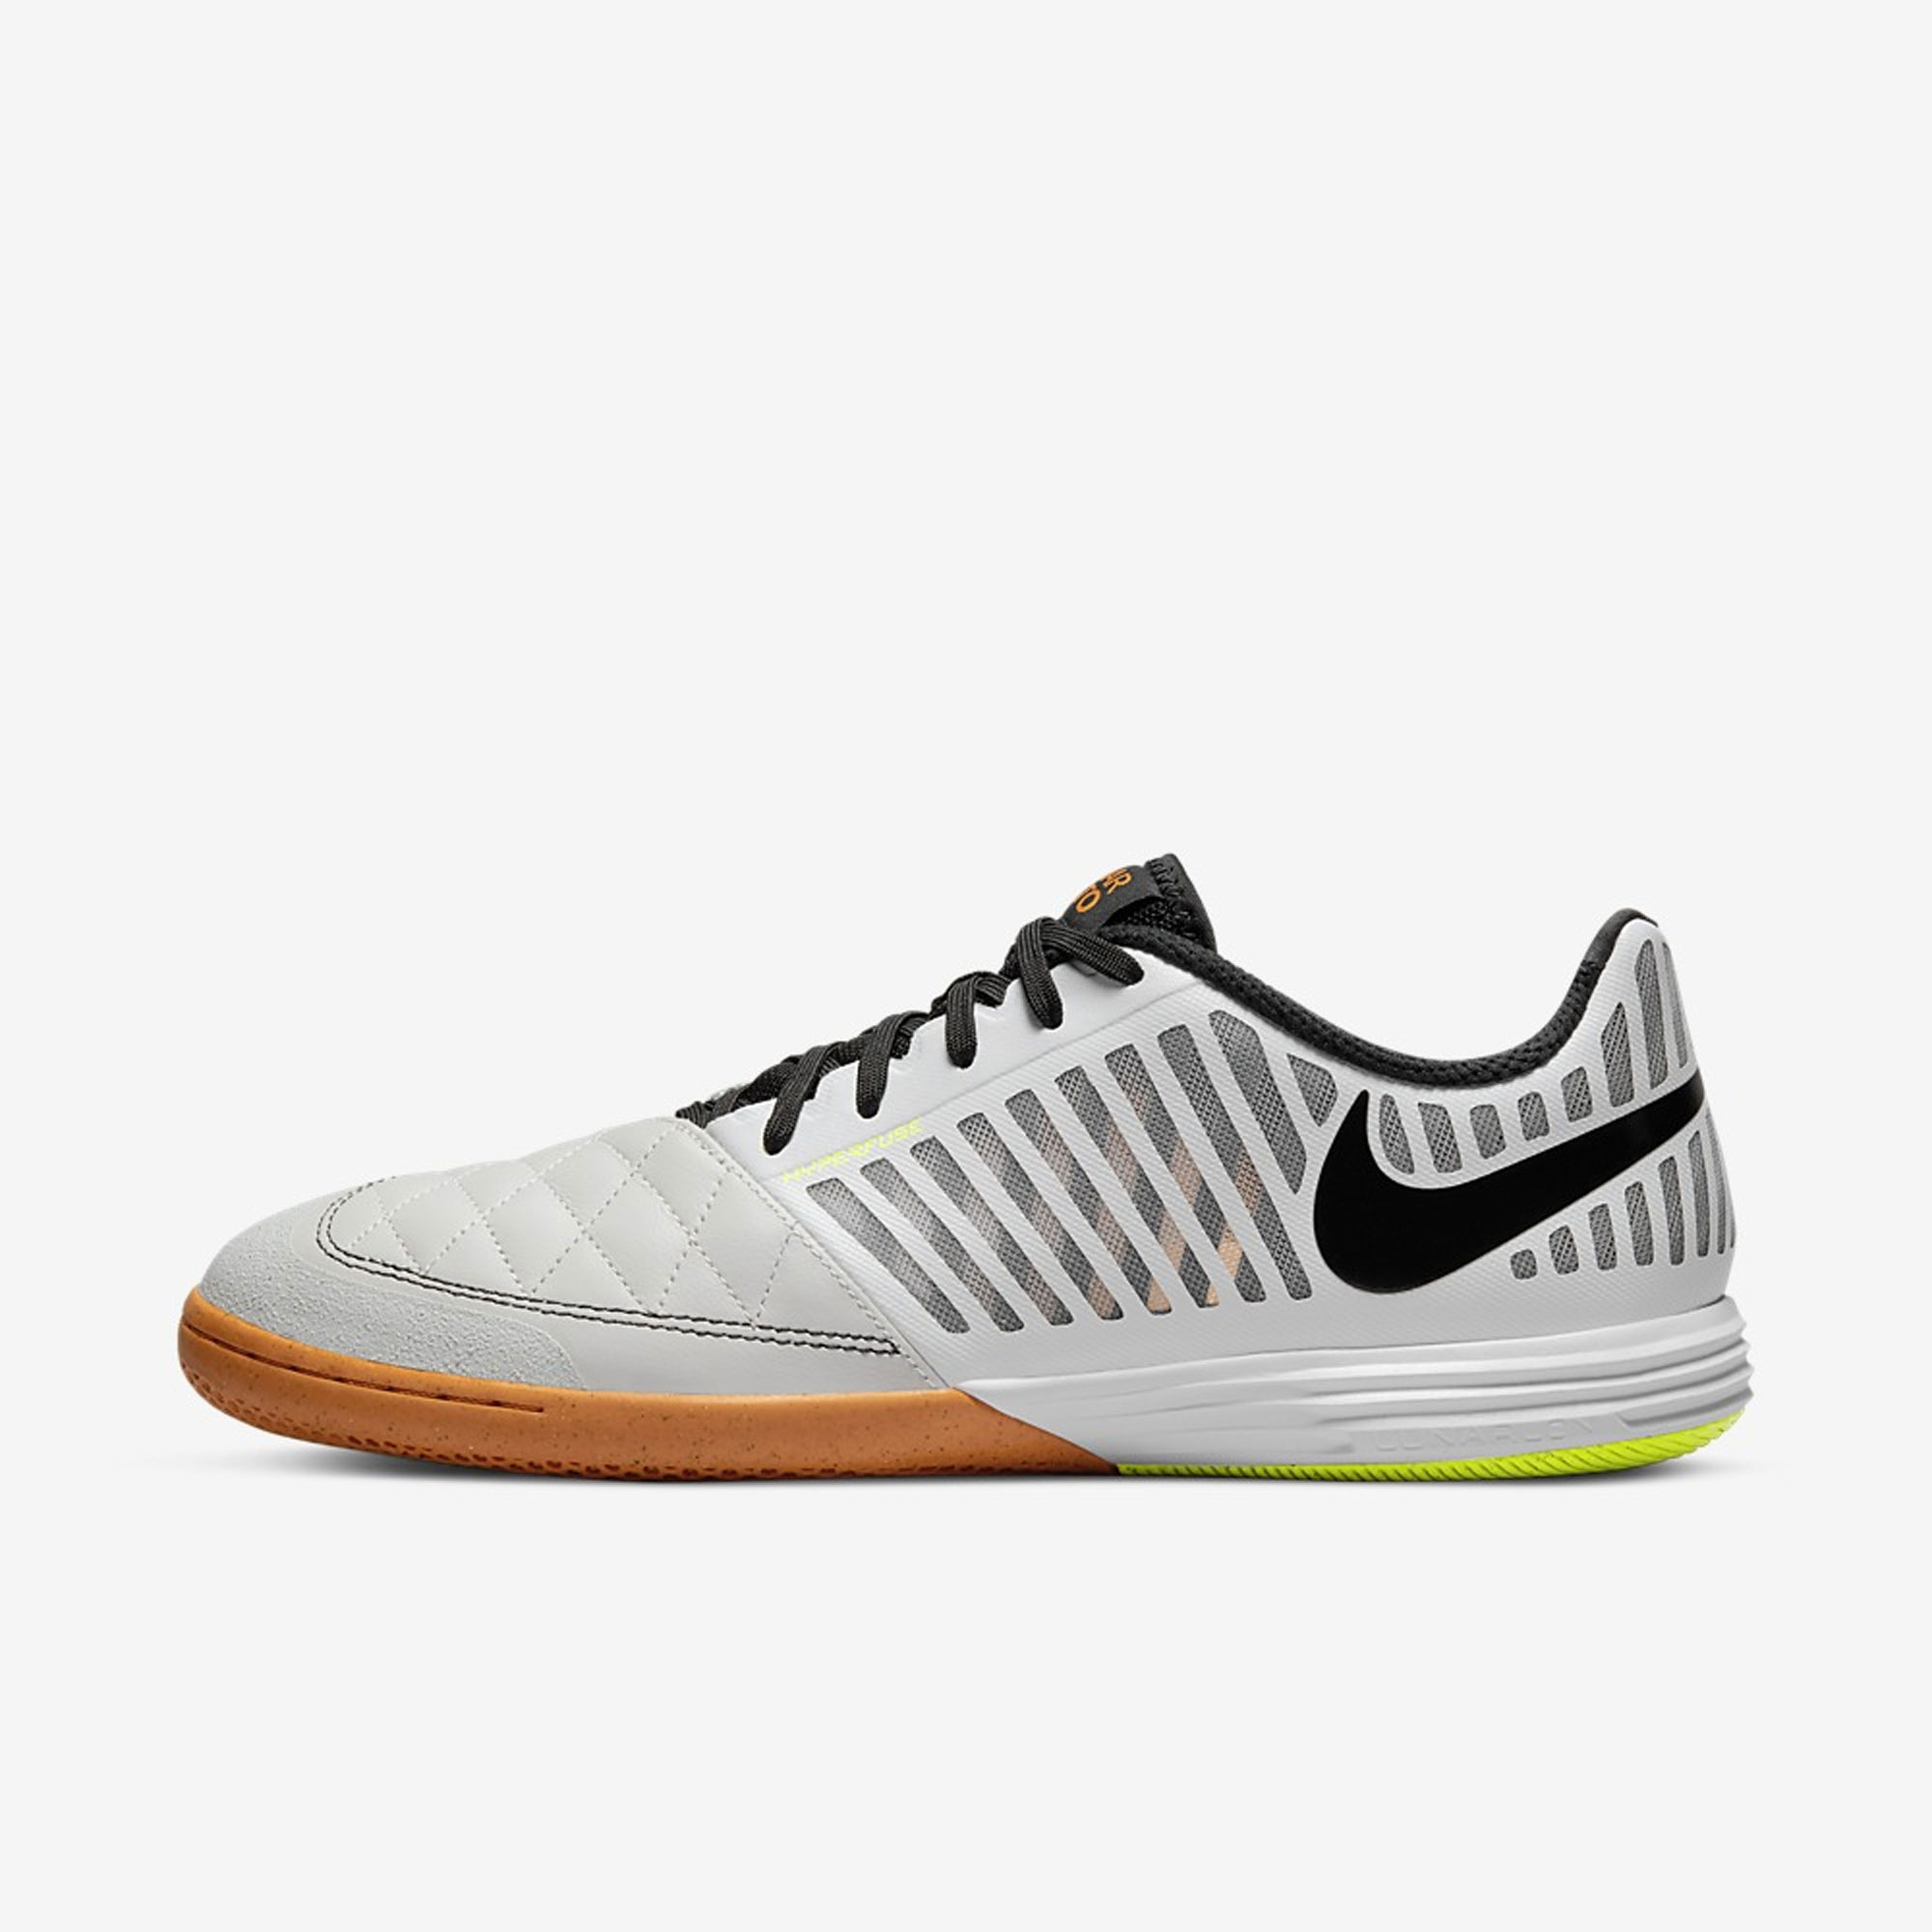 stefanssoccer.com:Nike Lunar Gato II Indoor Soccer Shoes - White Photon Dust Light Curry / Black